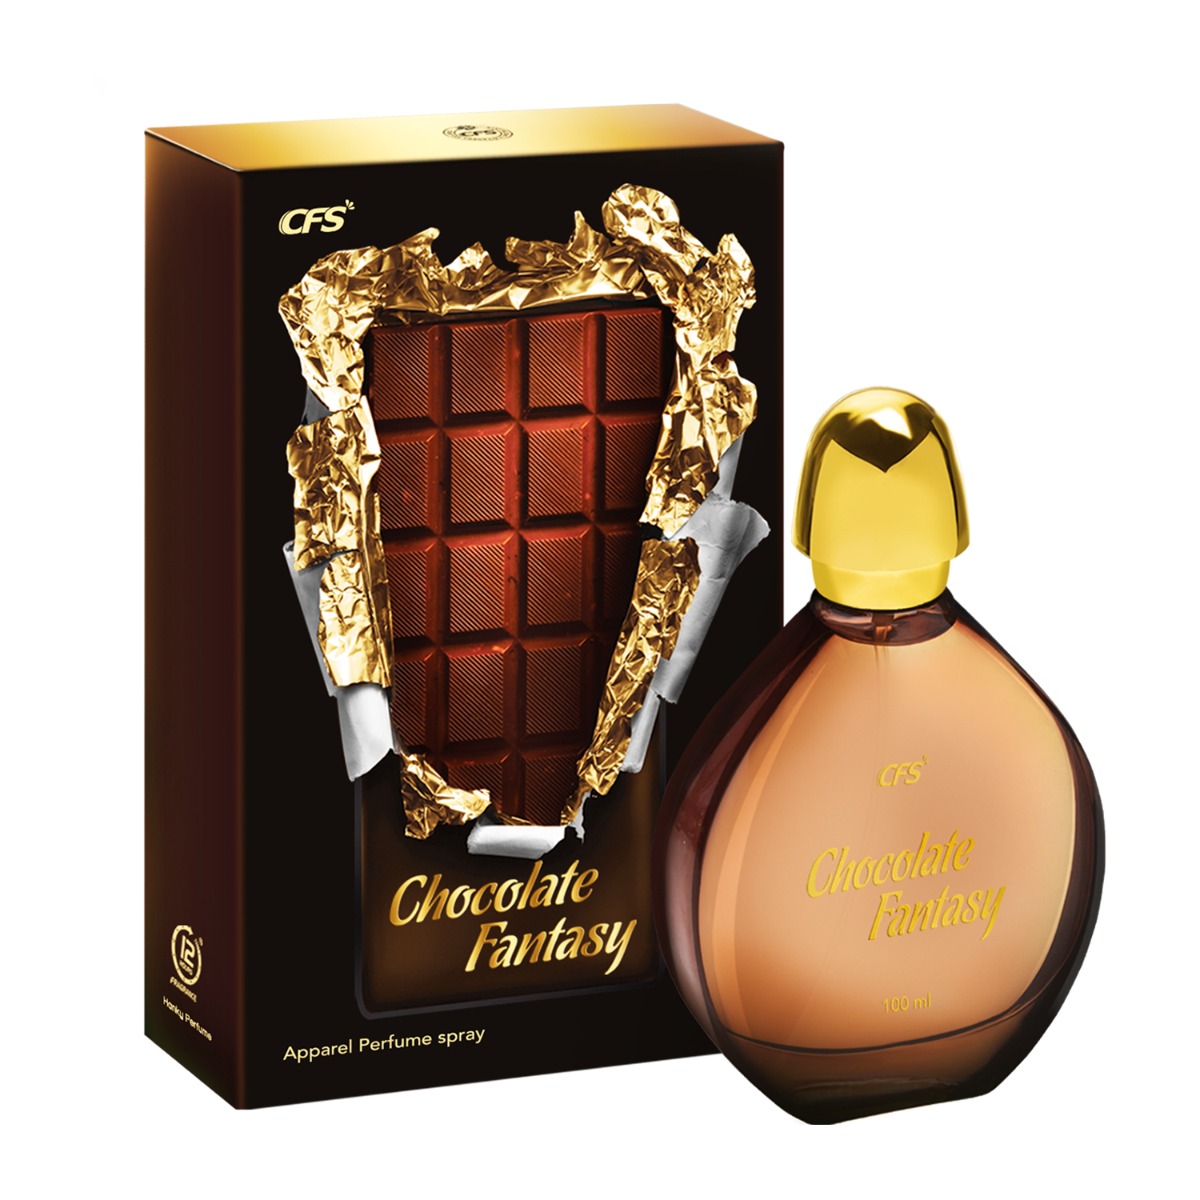 CFS Chocolate Fantasy Long Lasting Apparel Perfume Spray, 100ml